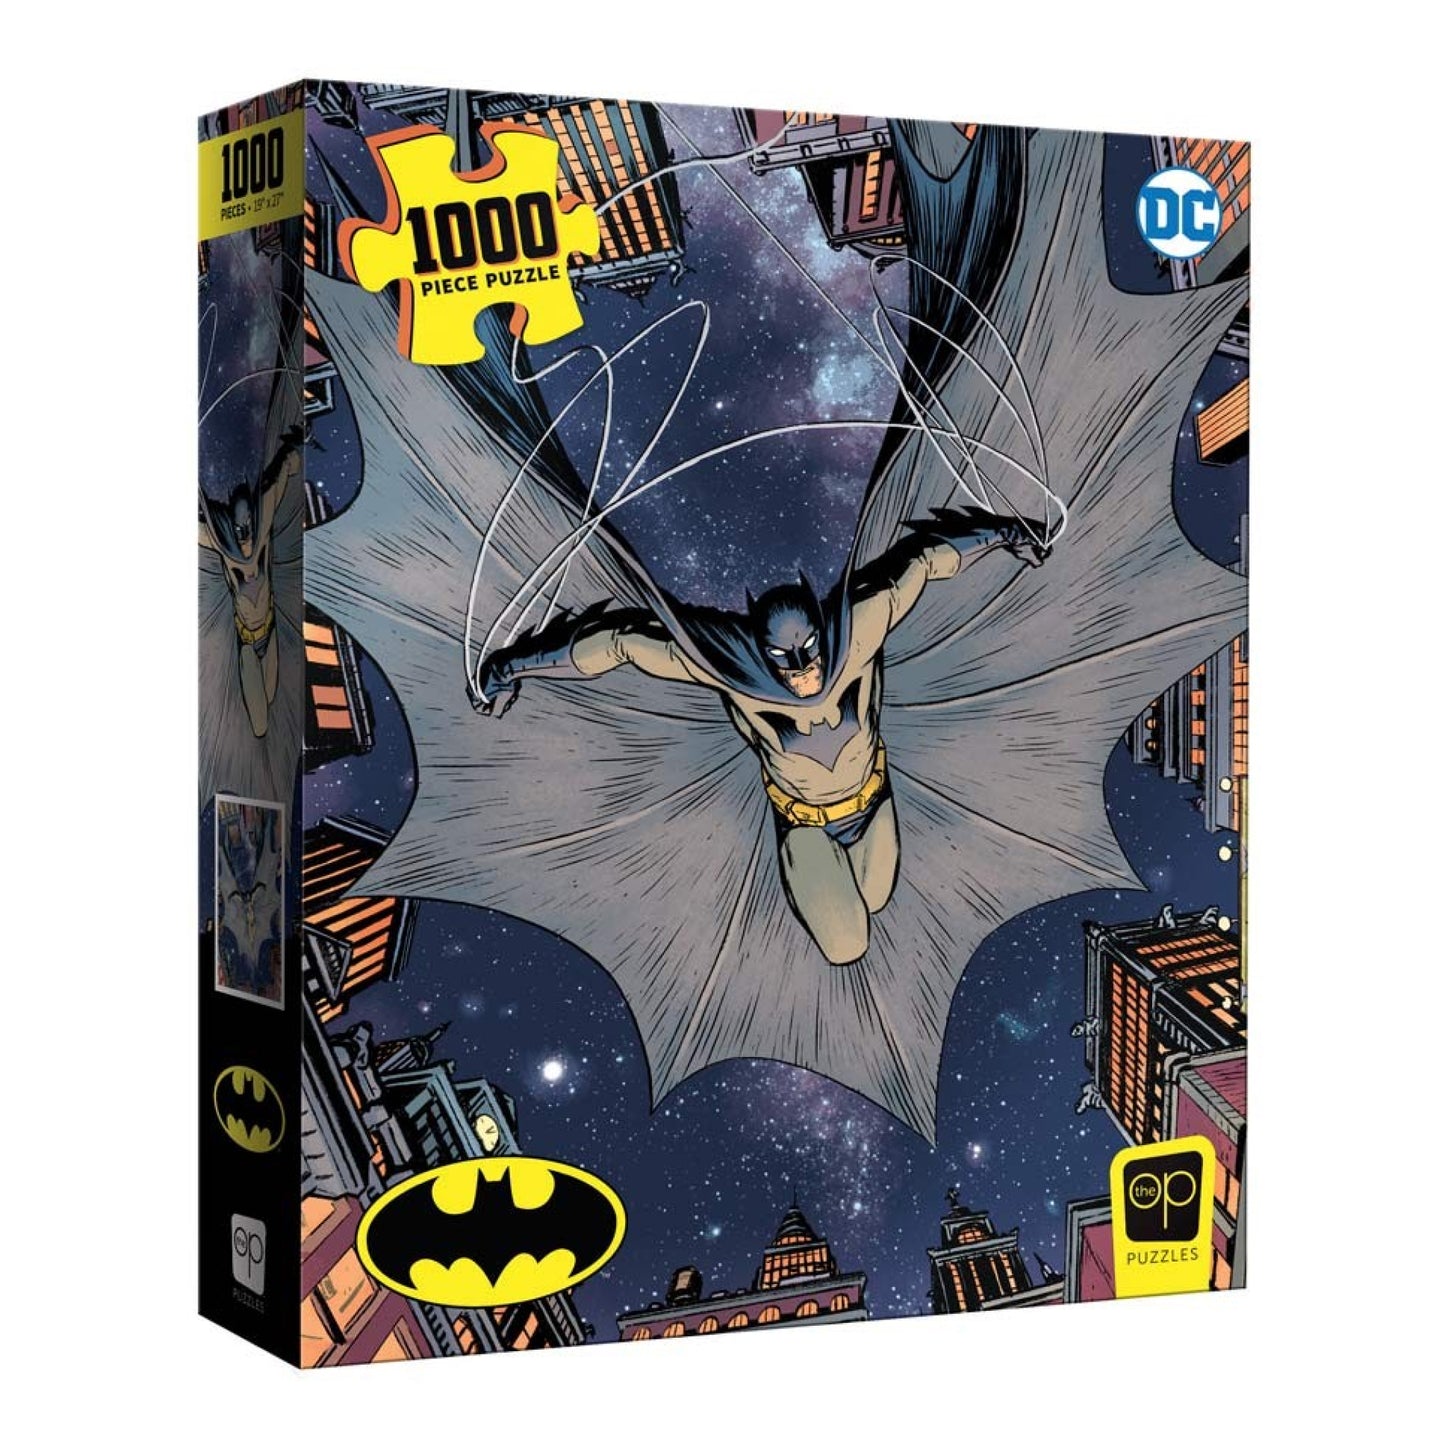 Puzzle: Batman "I Am The Night" 1000pc